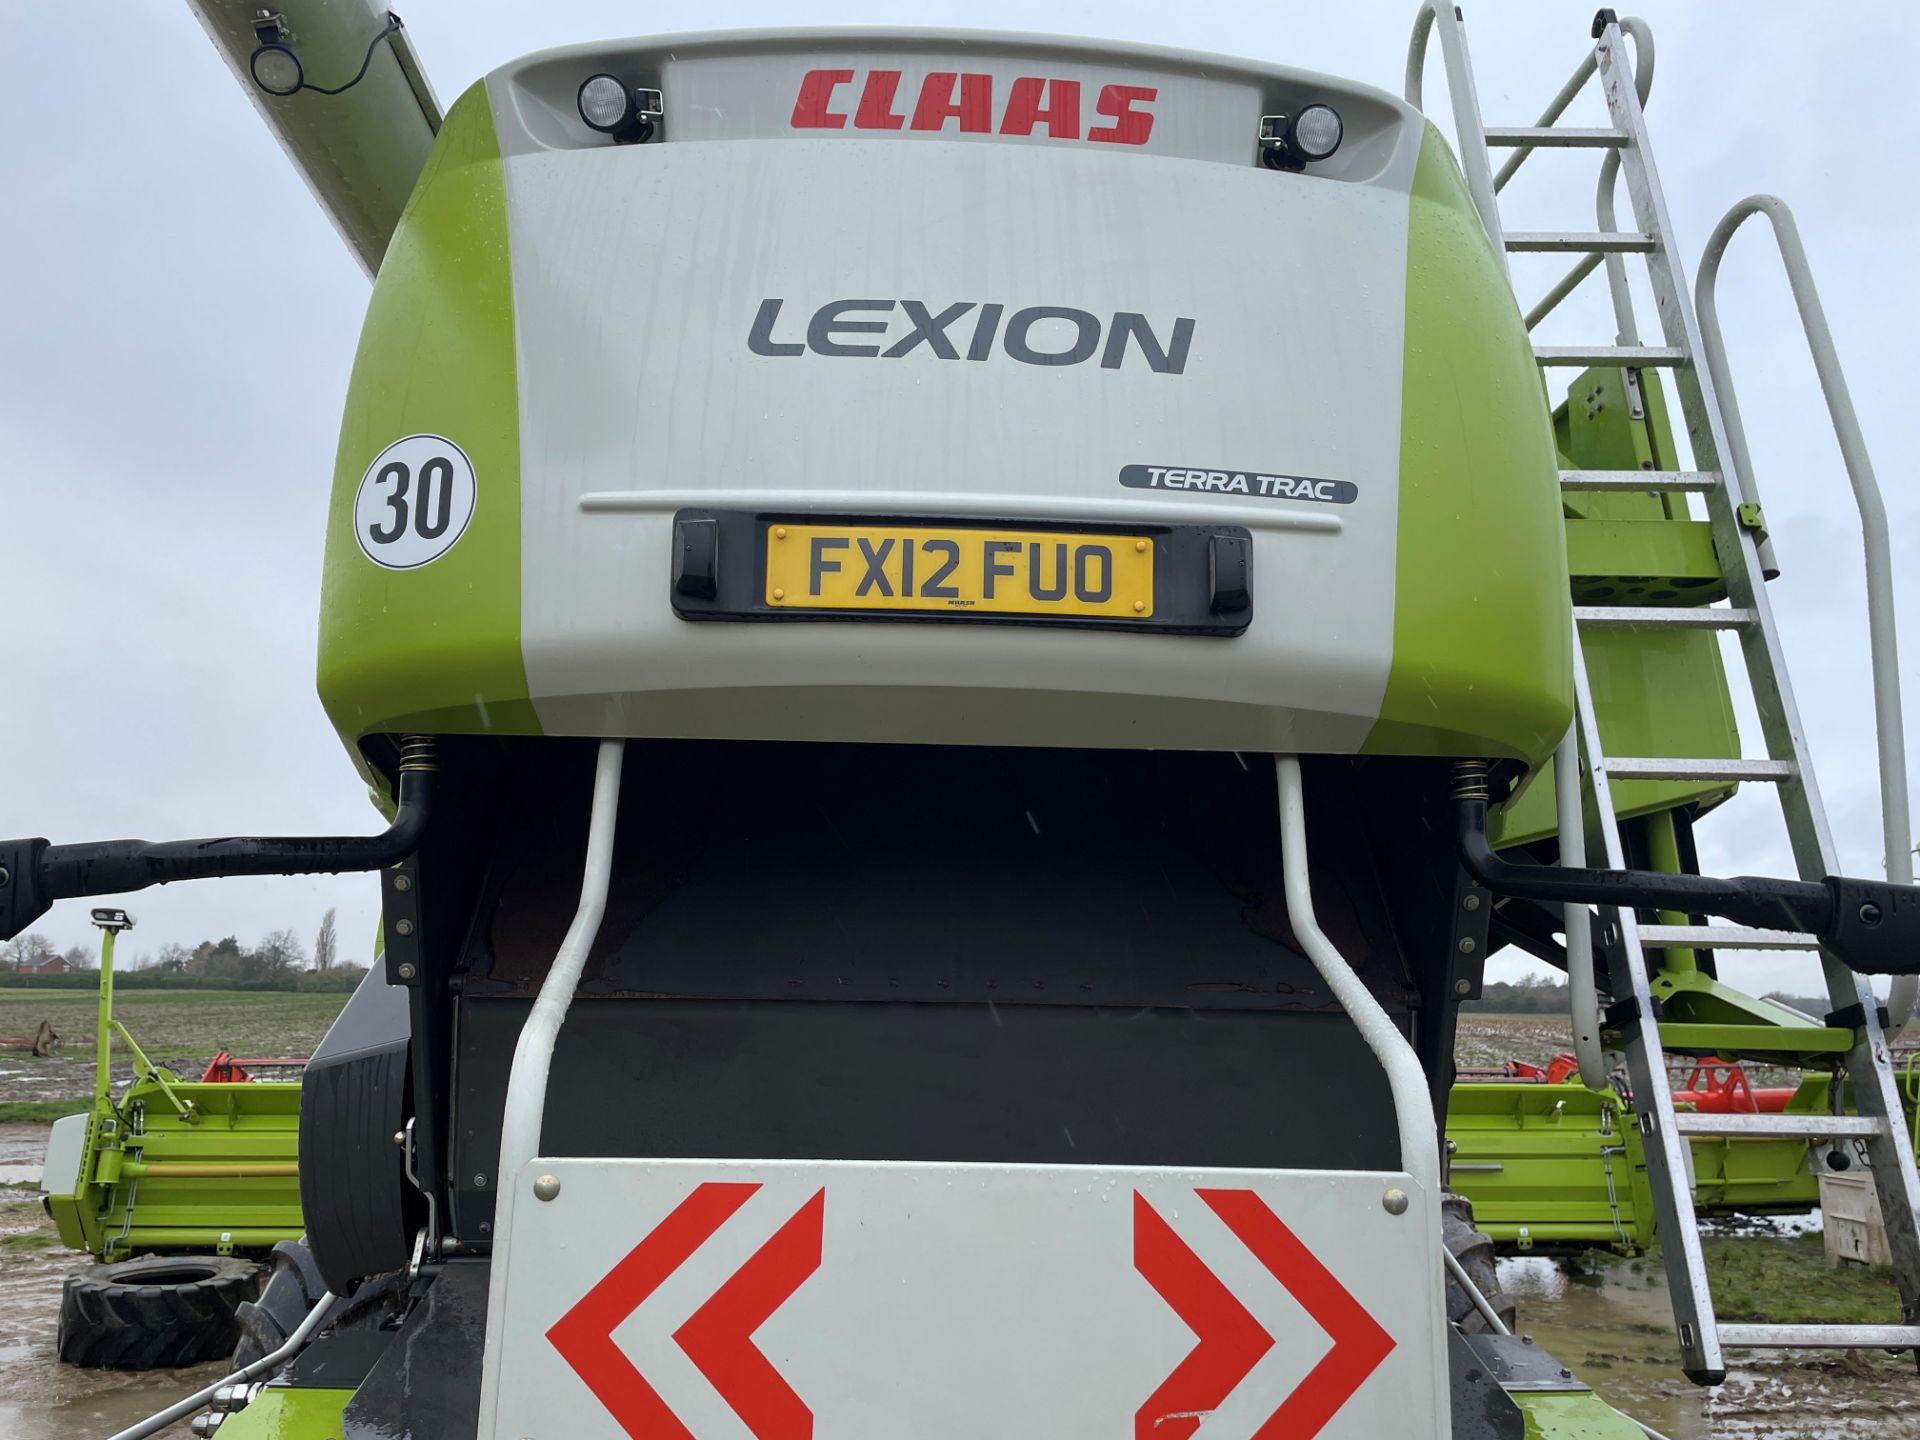 12) Claas Lexion 760TT Terra Trac combine harvester - Image 2 of 2